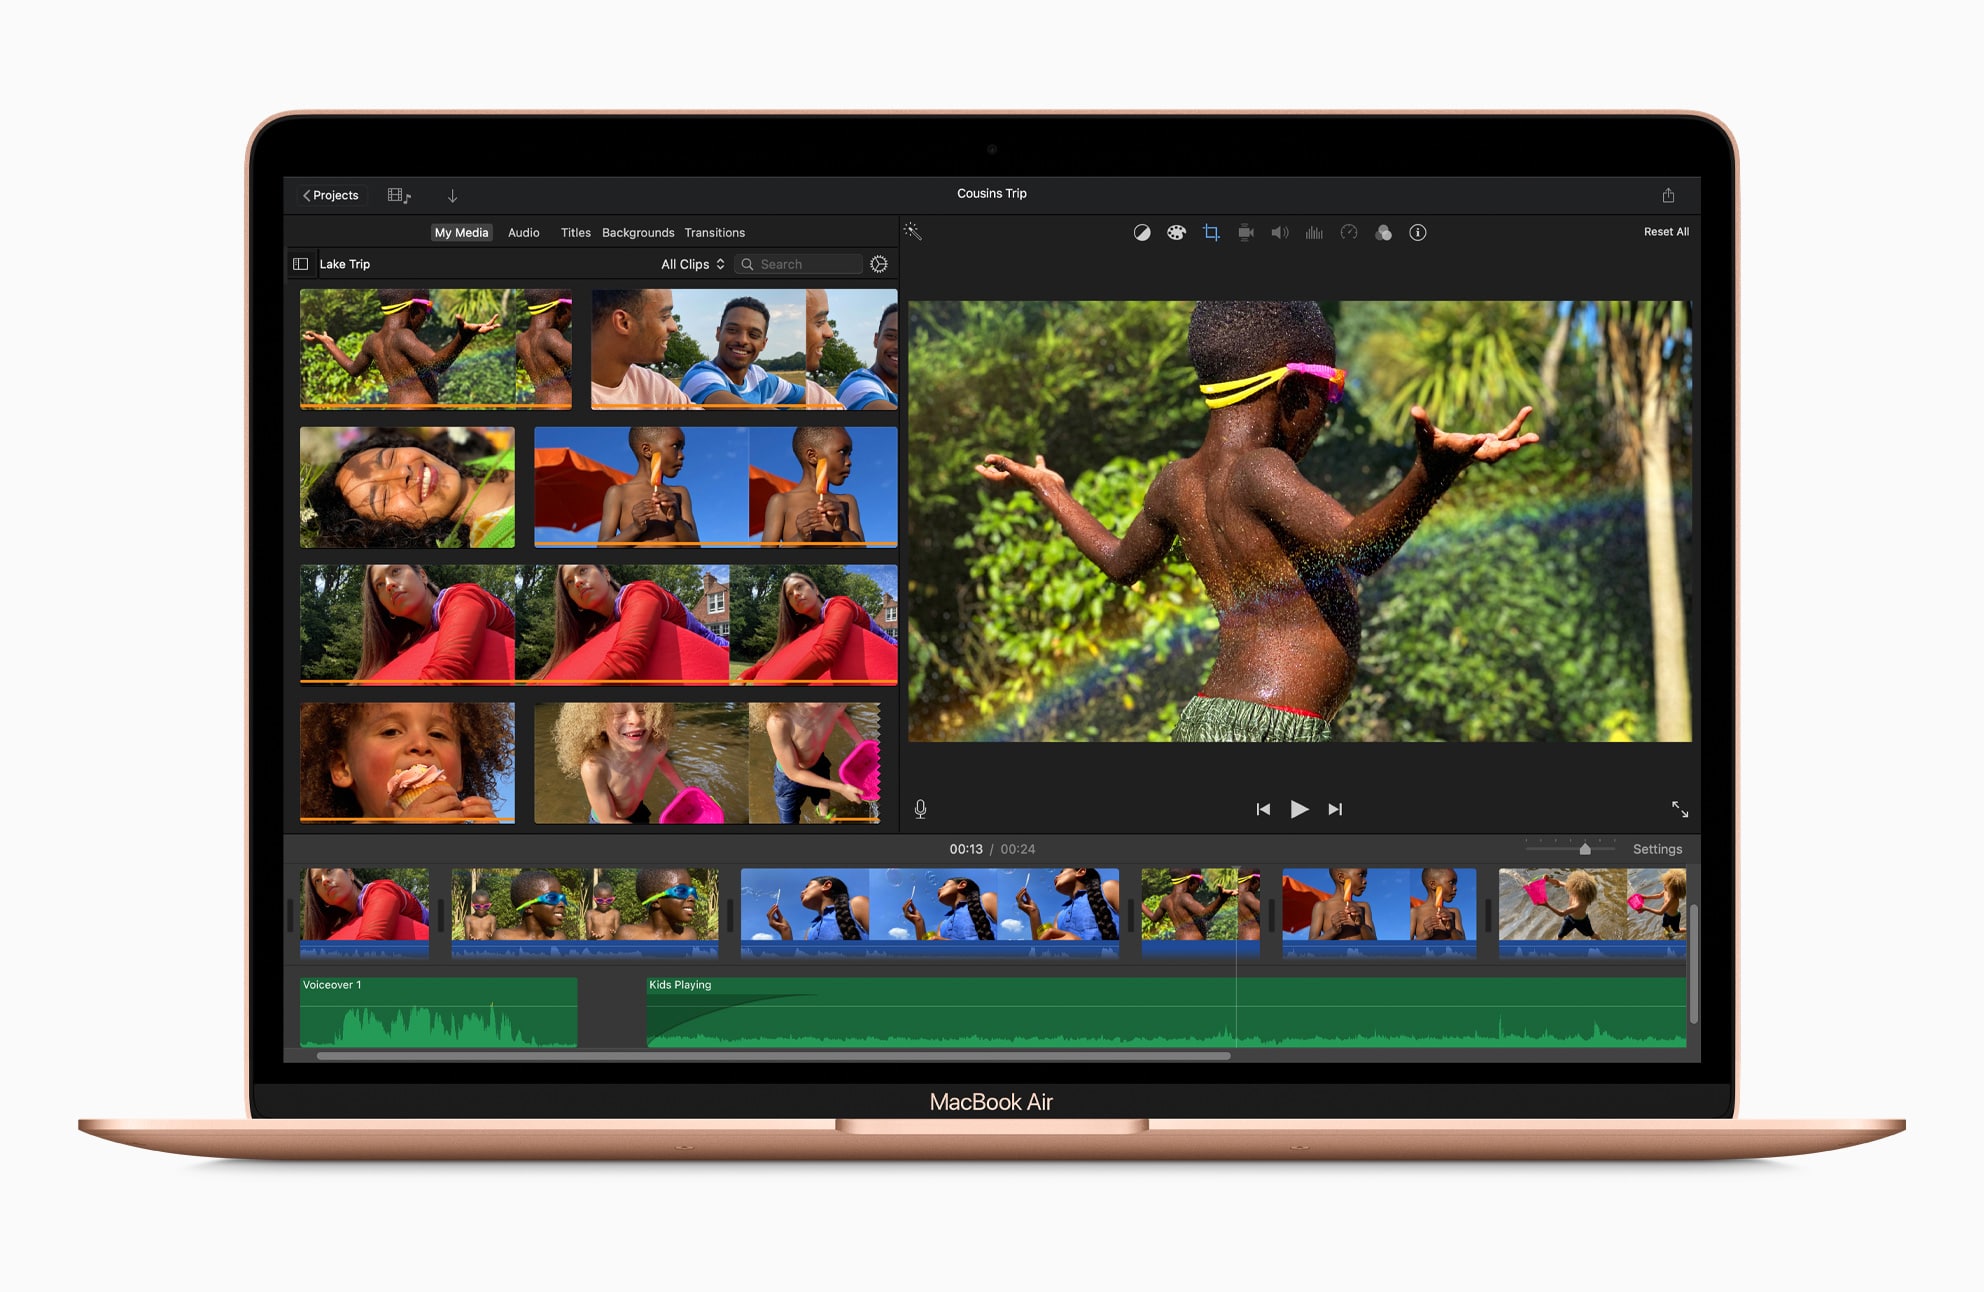 MacBook Air dourado rodando o iMovie